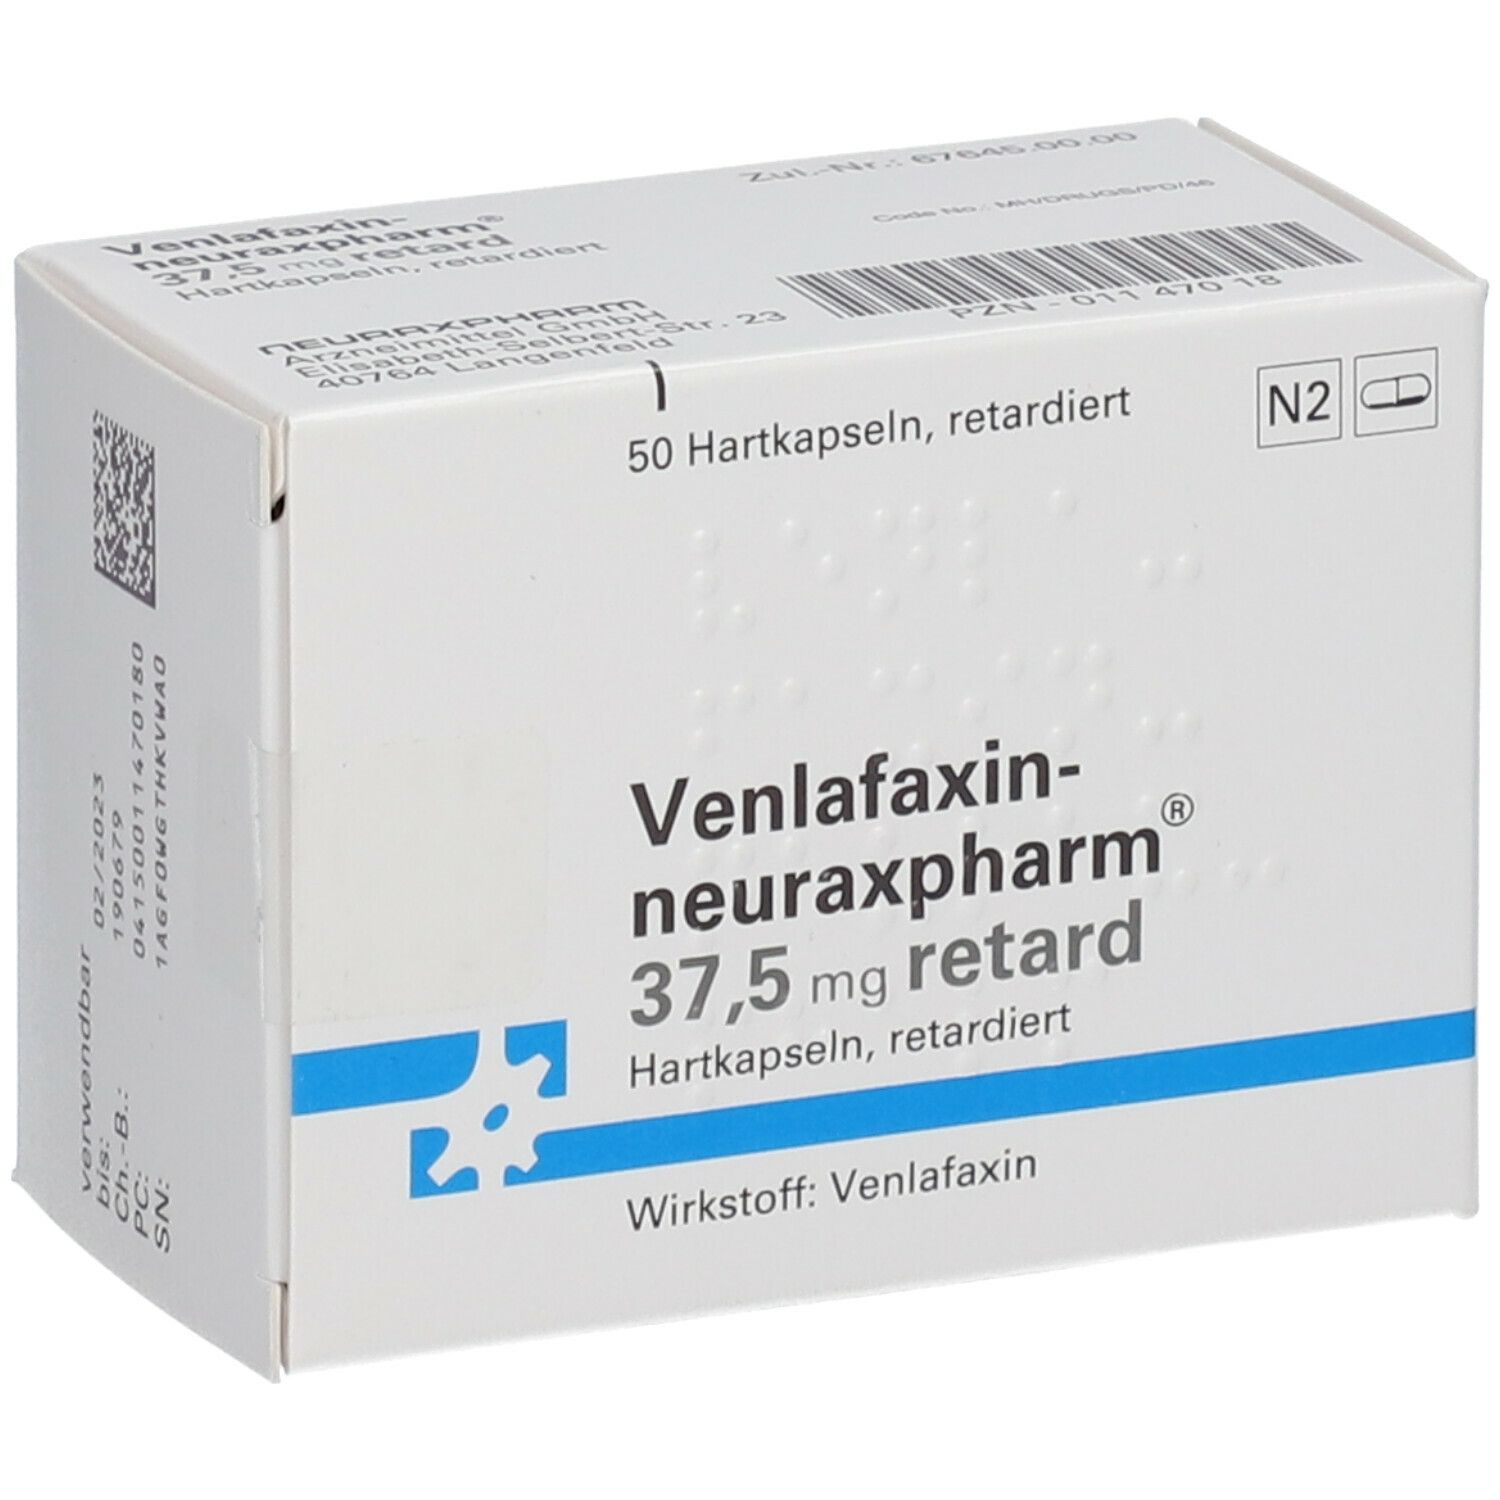 Venlafaxin-neuraxpharm® 37,5 mg retard